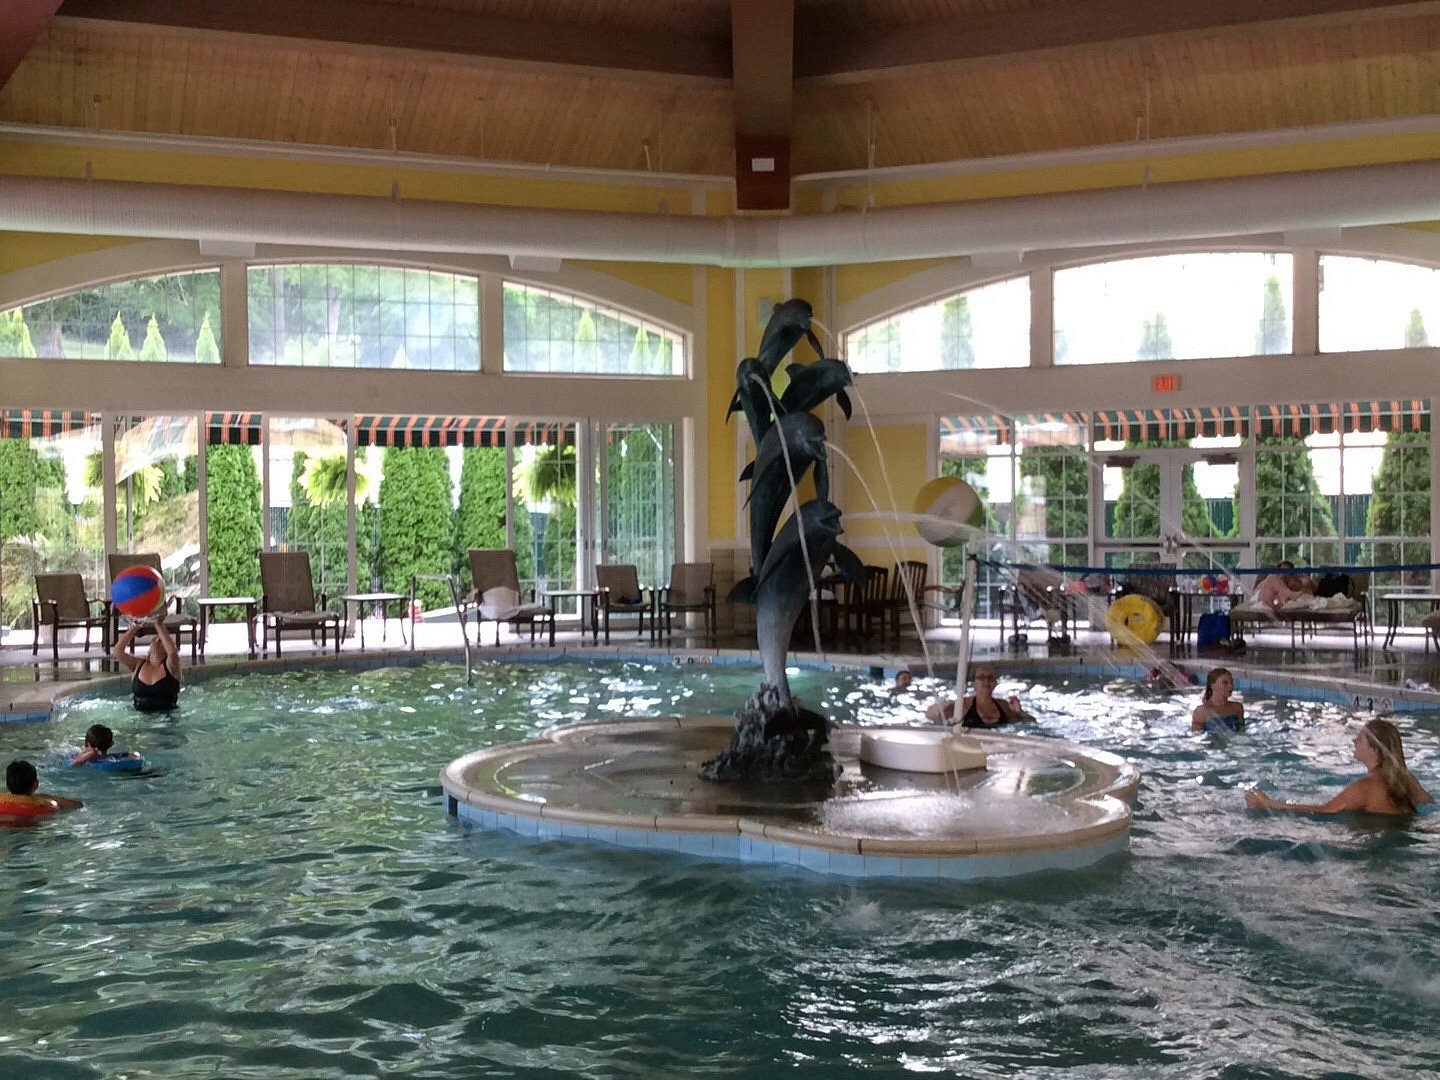 French Lick Springs Villas pool